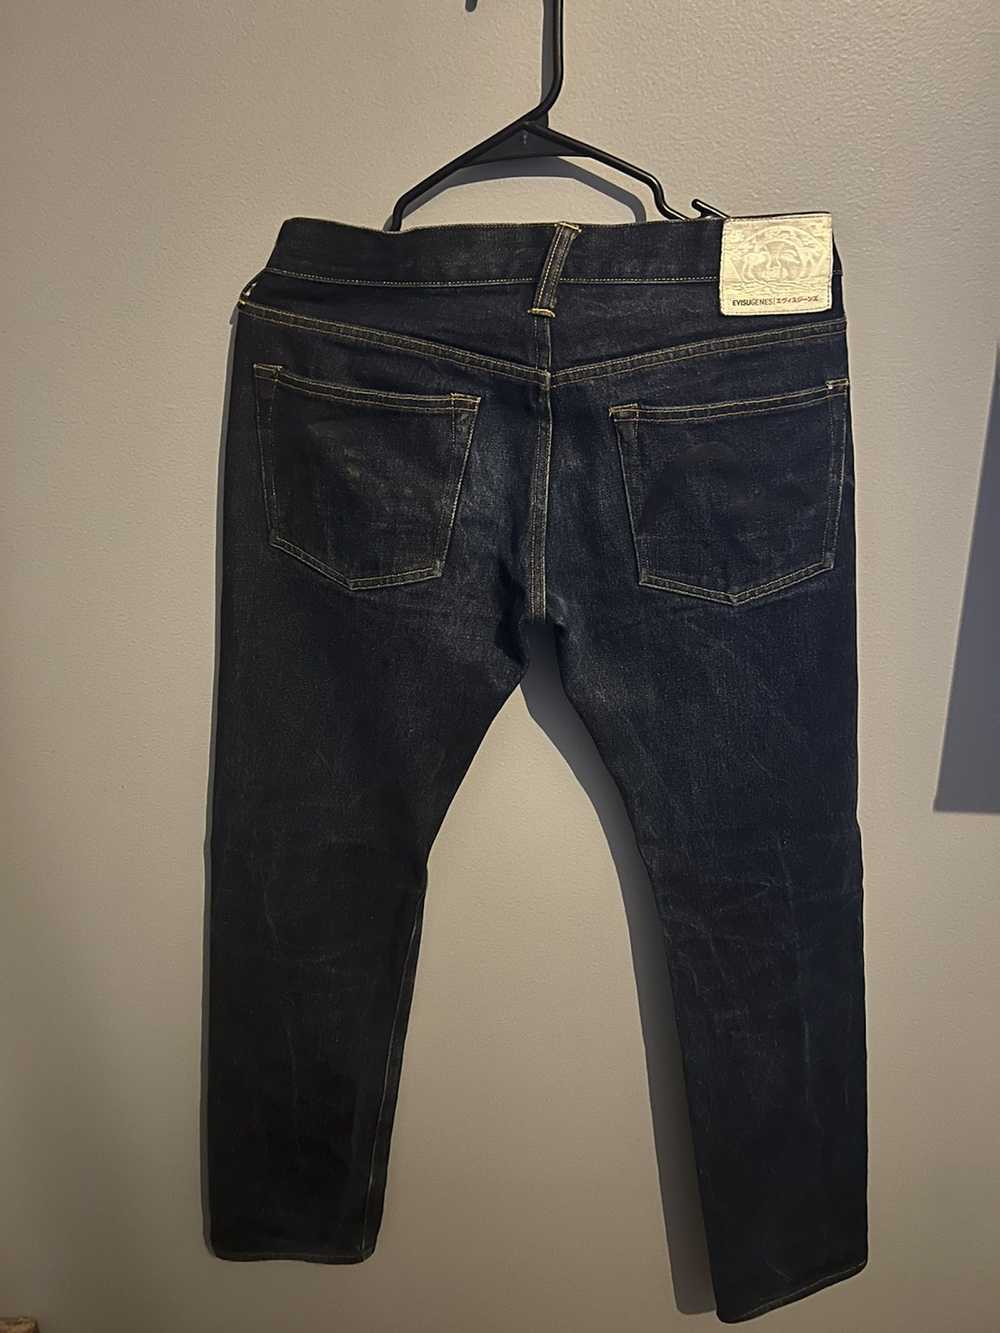 Evisu evisu jeans - image 2